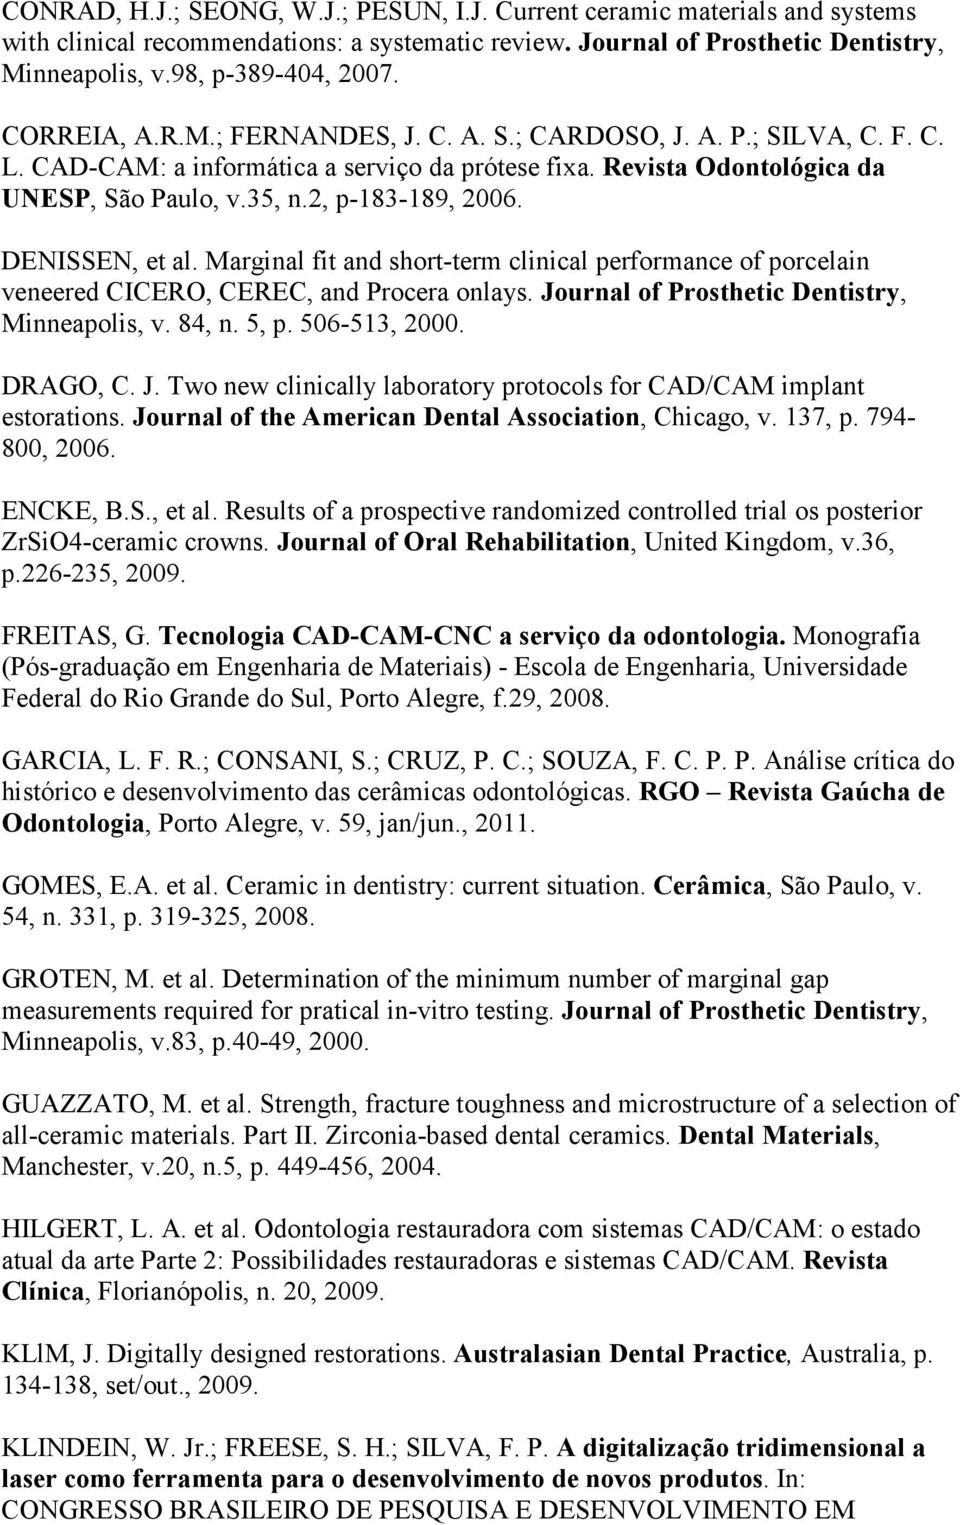 DENISSEN, et al. Marginal fit and short-term clinical performance of porcelain veneered CICERO, CEREC, and Procera onlays. Journal of Prosthetic Dentistry, Minneapolis, v. 84, n. 5, p. 506-513, 2000.